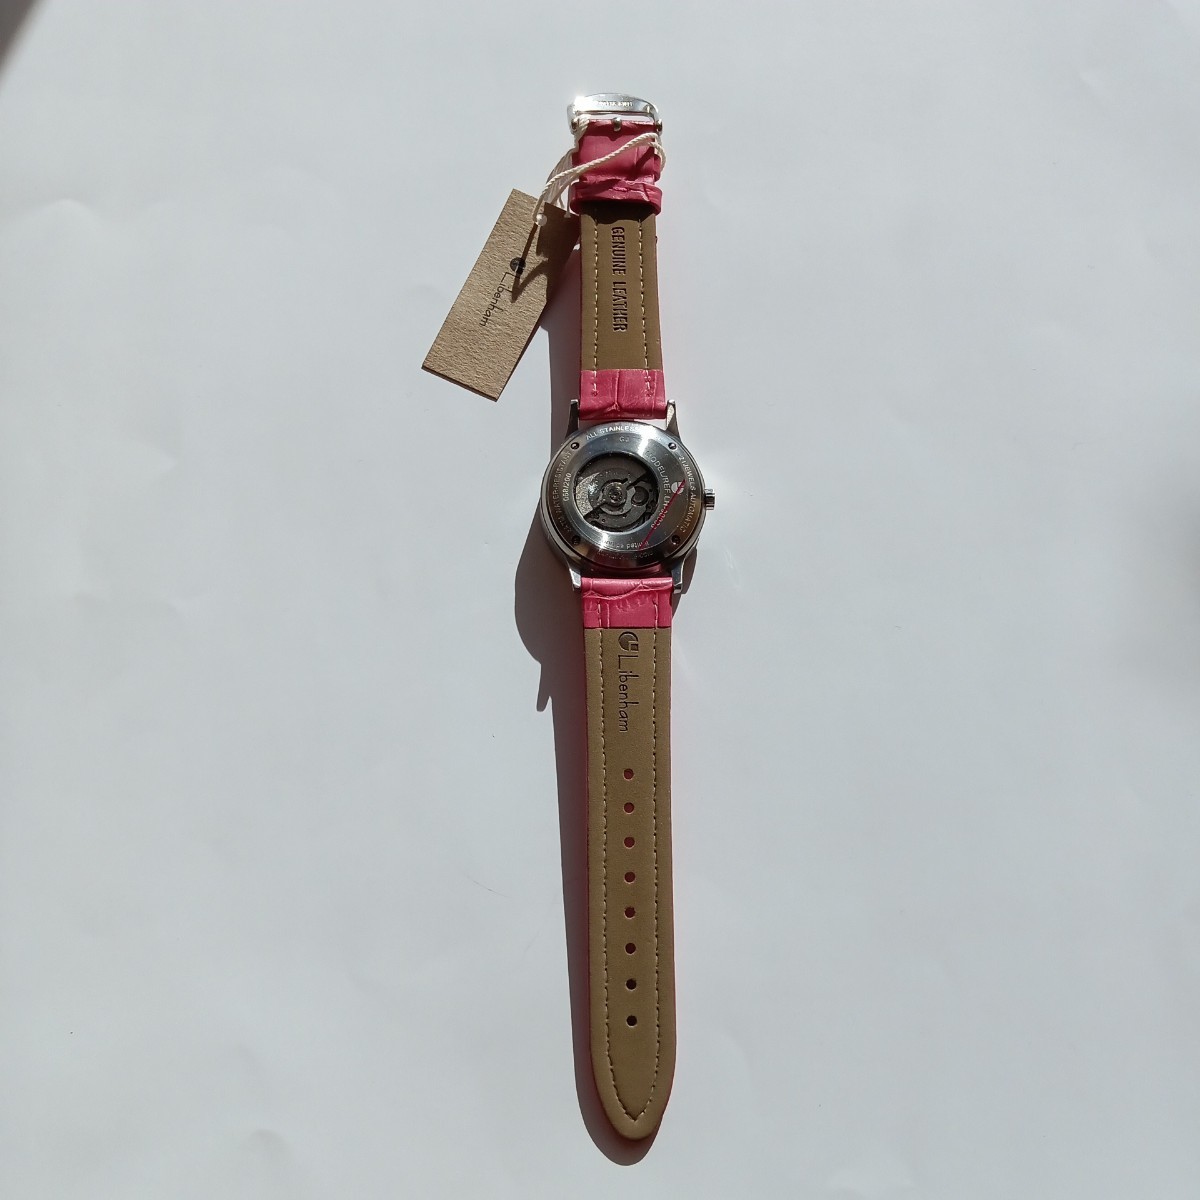  Libenham × Nicola i Burgman Vintage Rose machine model new goods limited amount goods rare wristwatch leather belt self-winding watch unisex pink flower 